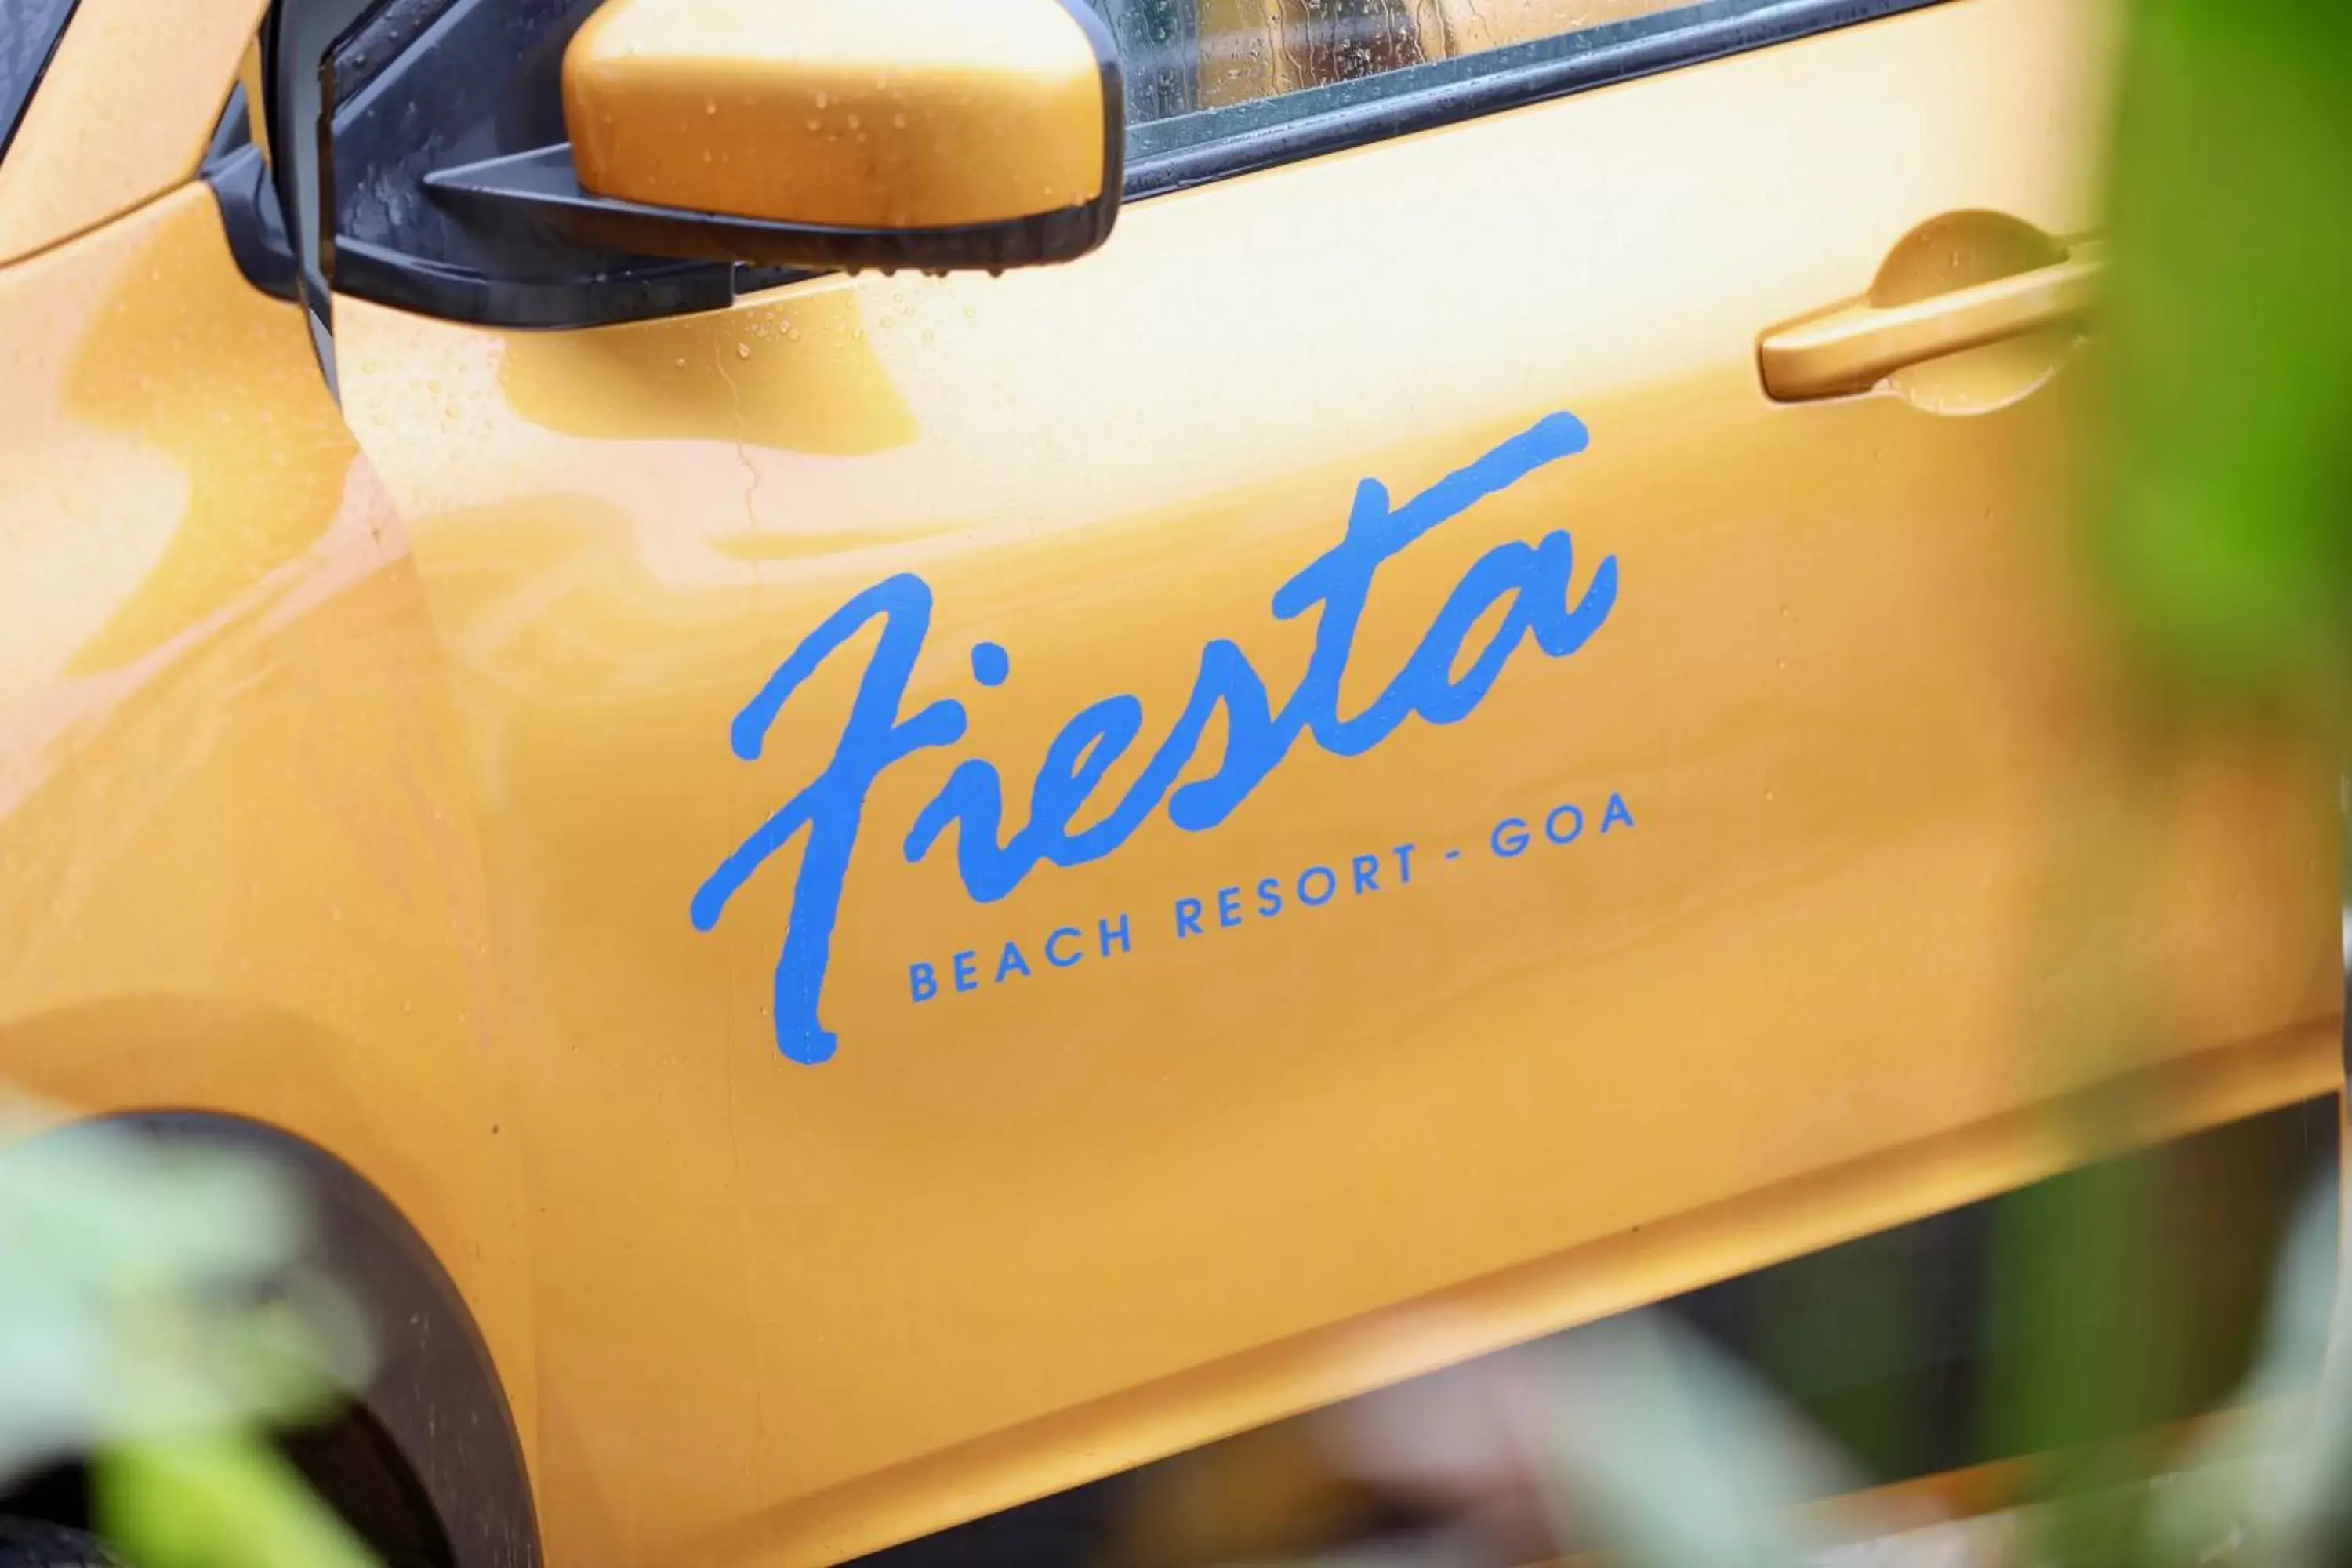 Property logo or sign in Fiesta Beach Resort